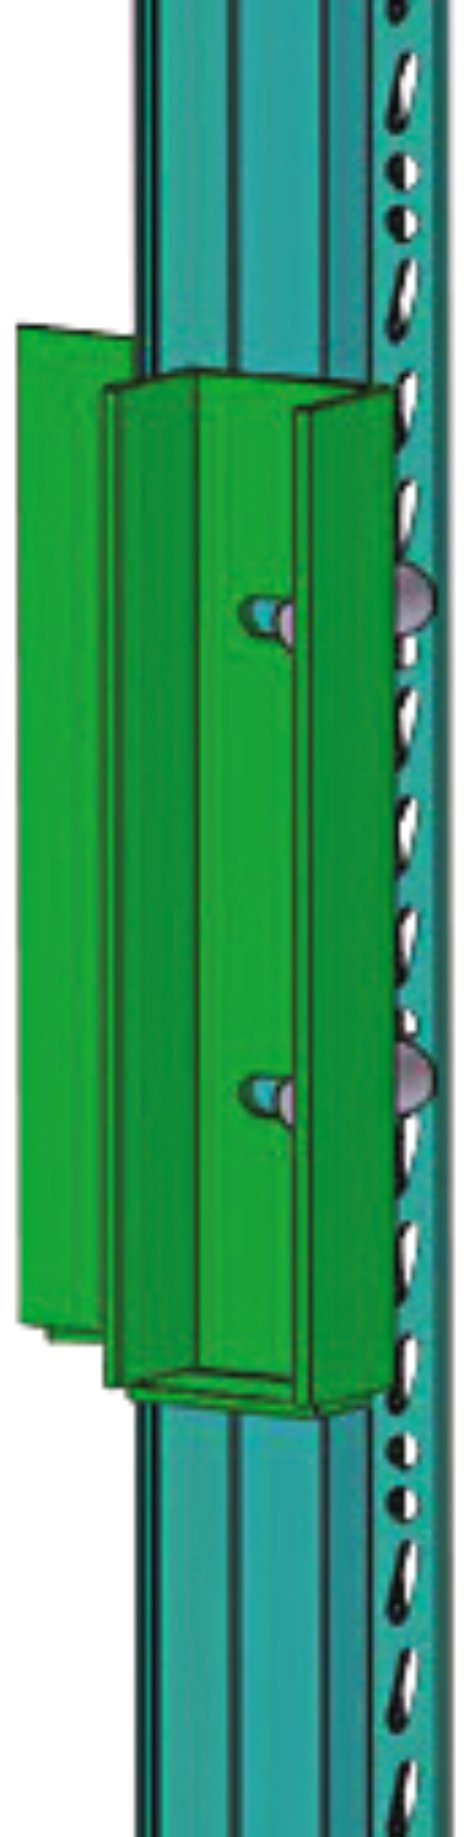 H+S Sockelbretthalterung für Ecksäule grün